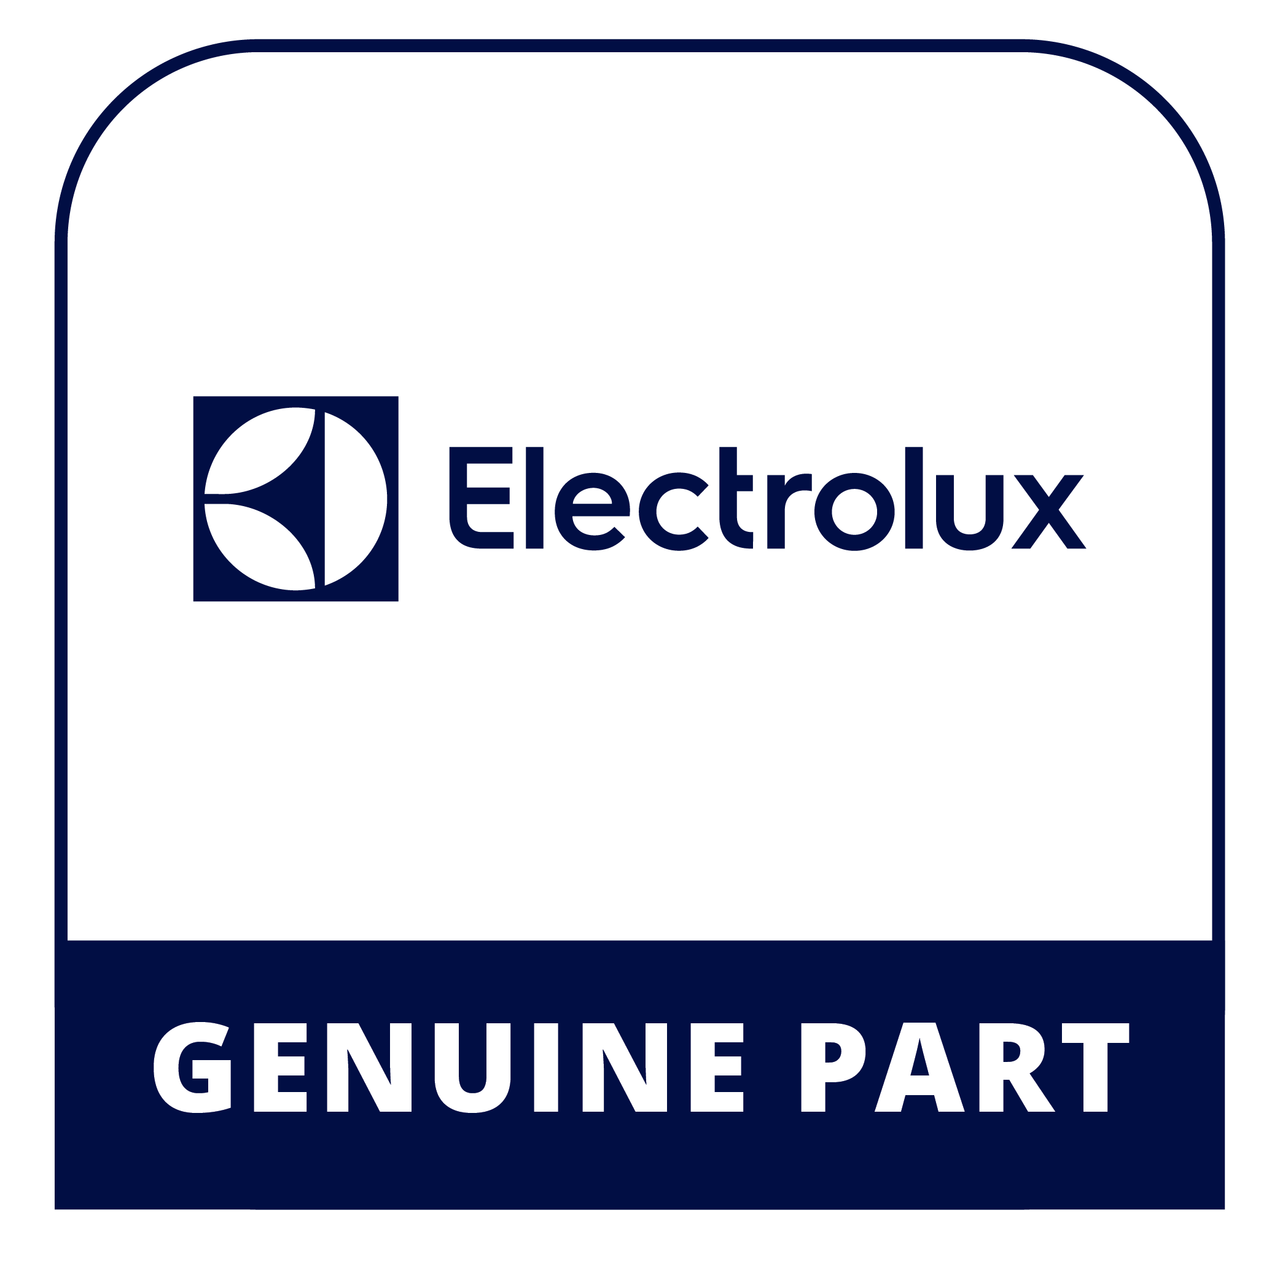 Frigidaire - Electrolux 5304501688 Control Panel - Genuine Electrolux Part